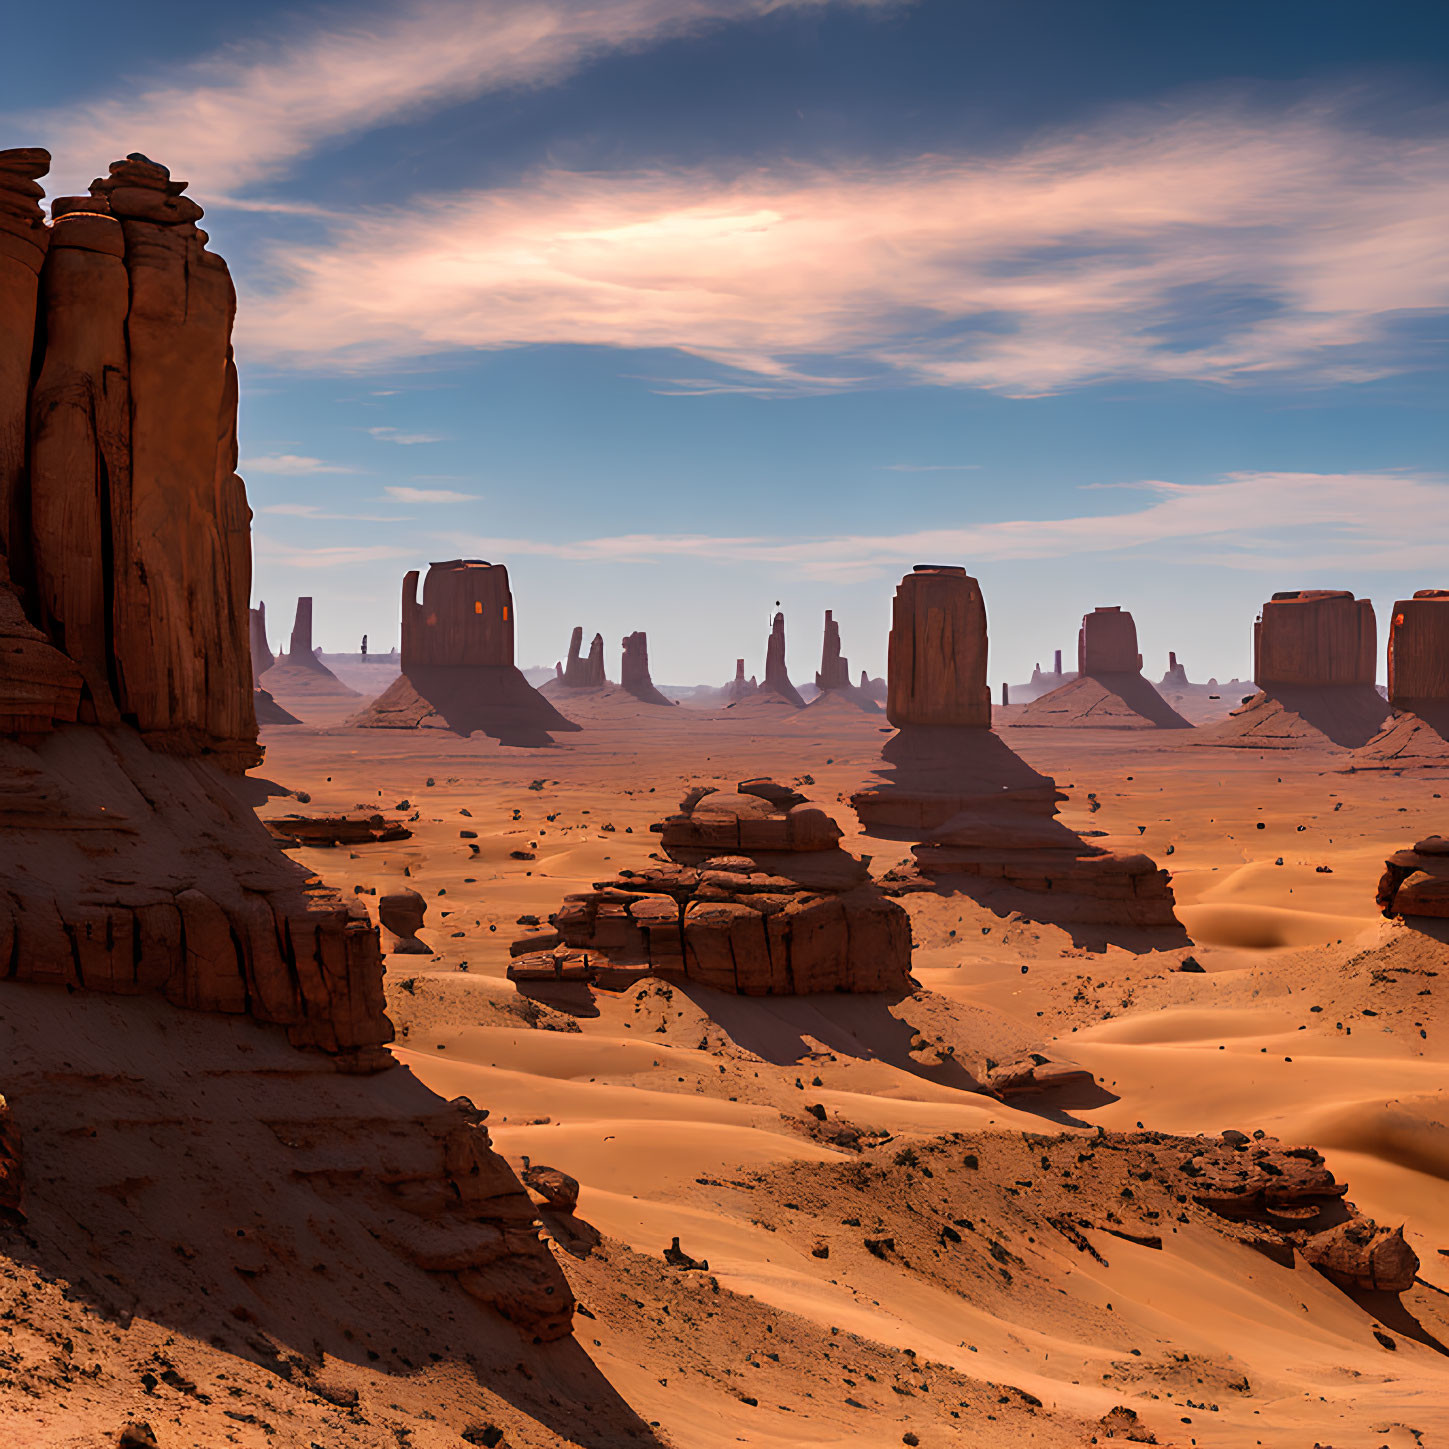 Majestic desert landscape with towering sandstone buttes under dynamic sky